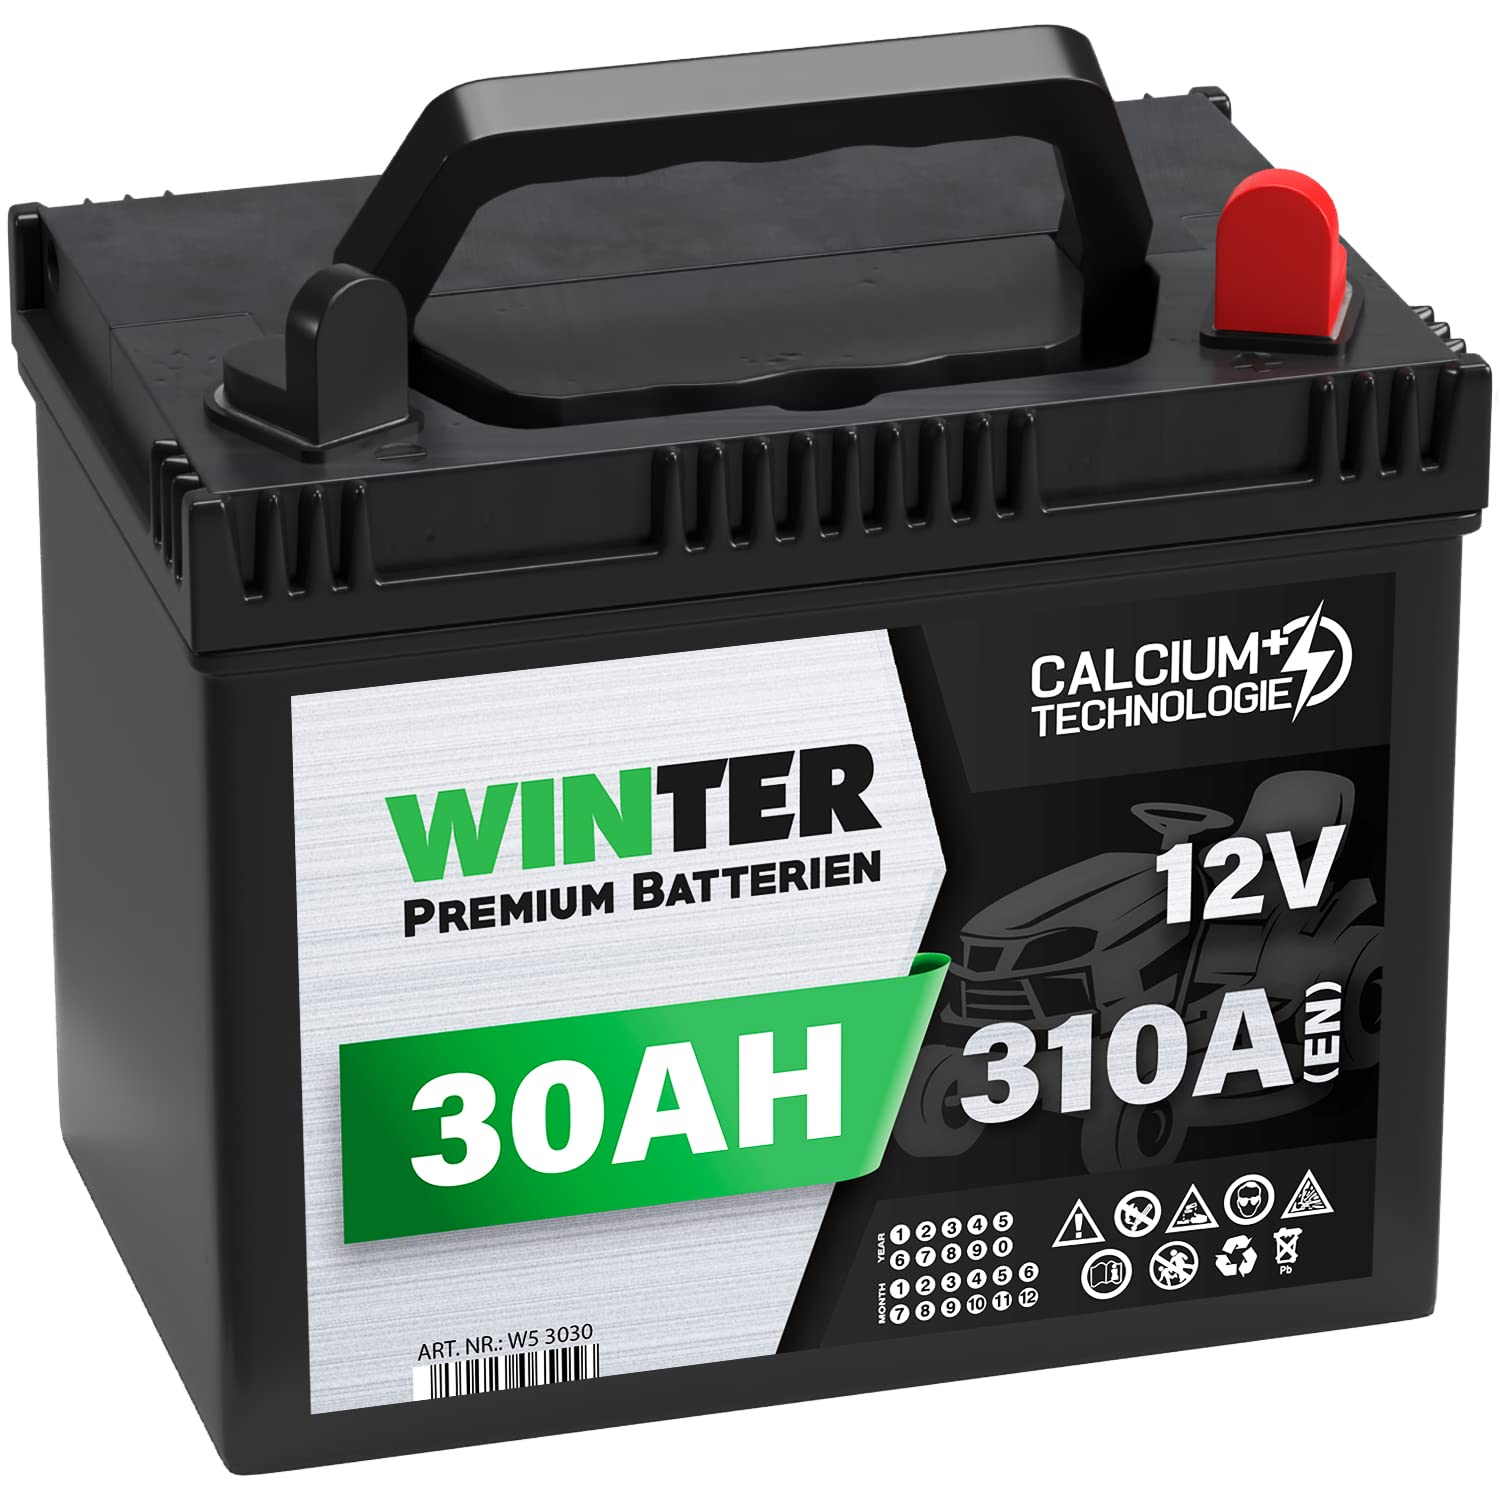 Aufsitzmäher Batterie 12V 30Ah 310A/EN 53030 Rasentraktor Batterie Plus Pol Rechts von WINTER PREMIUM BATTERIEN